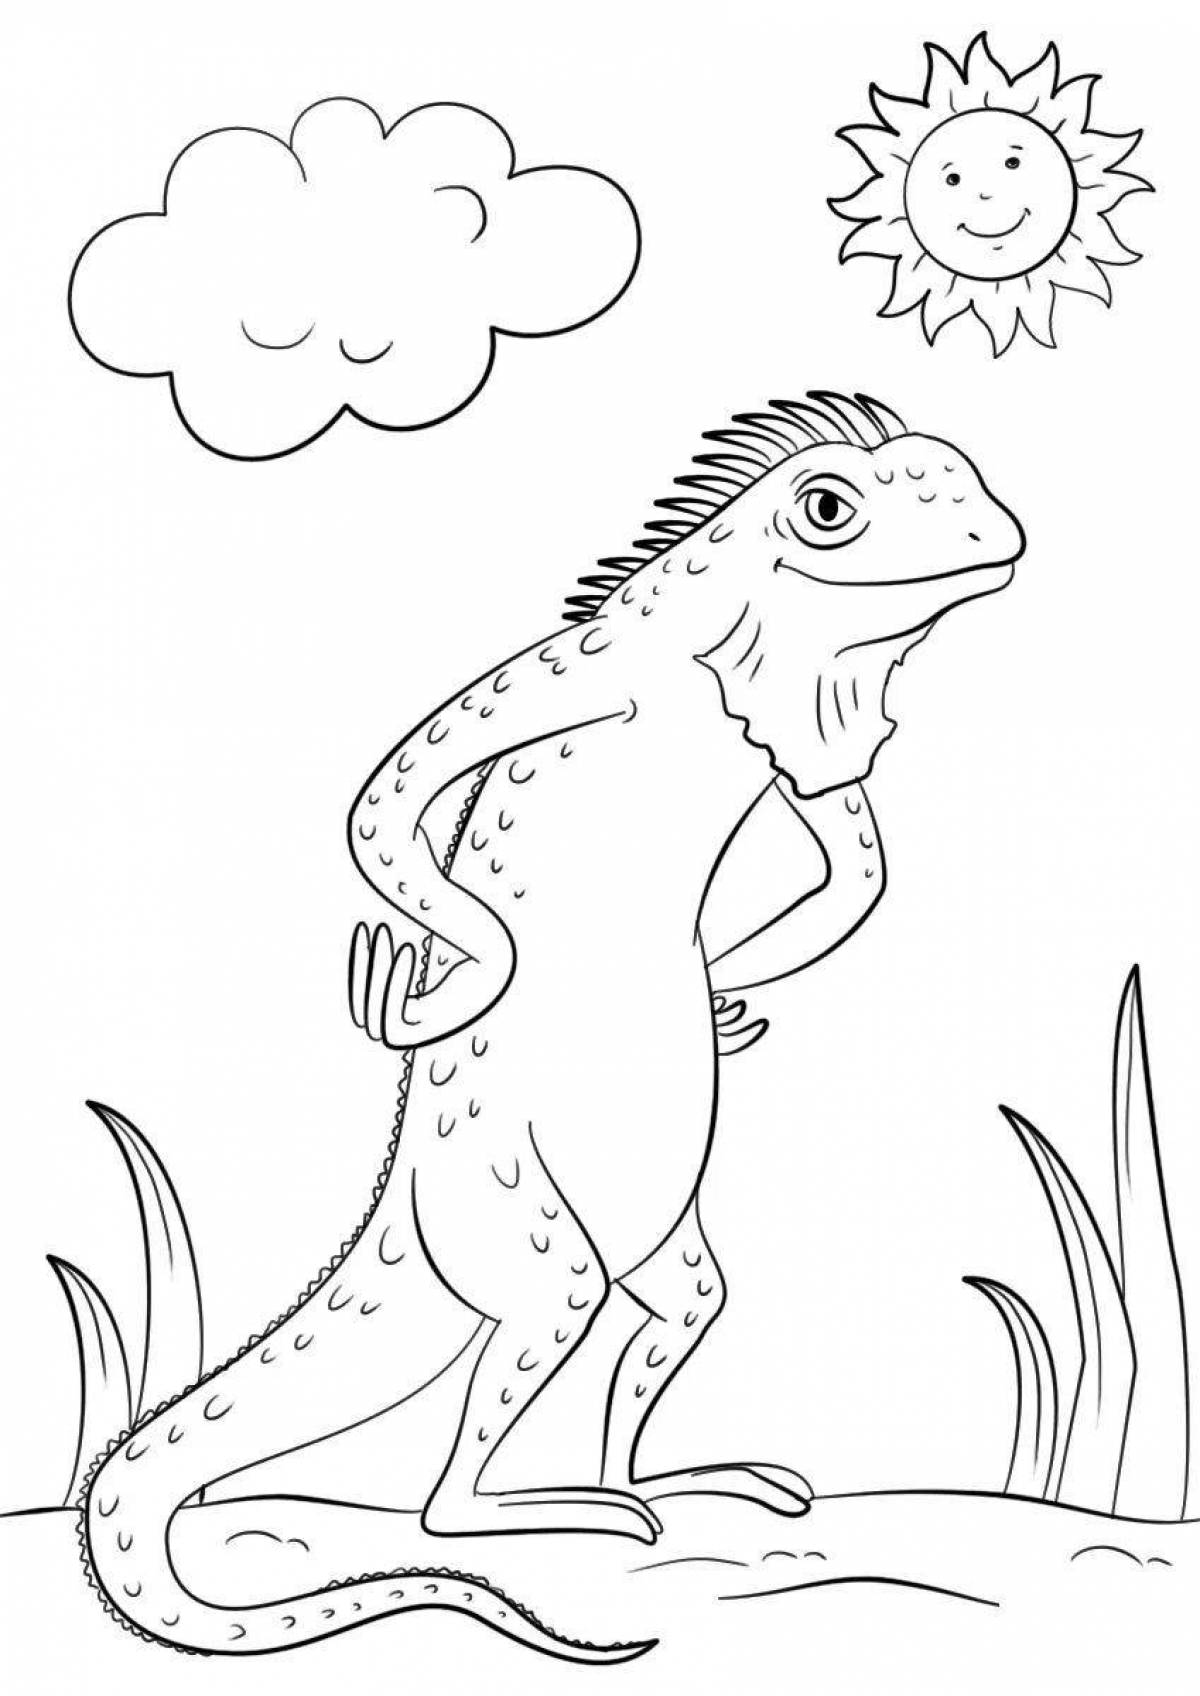 Shiny iguana coloring page